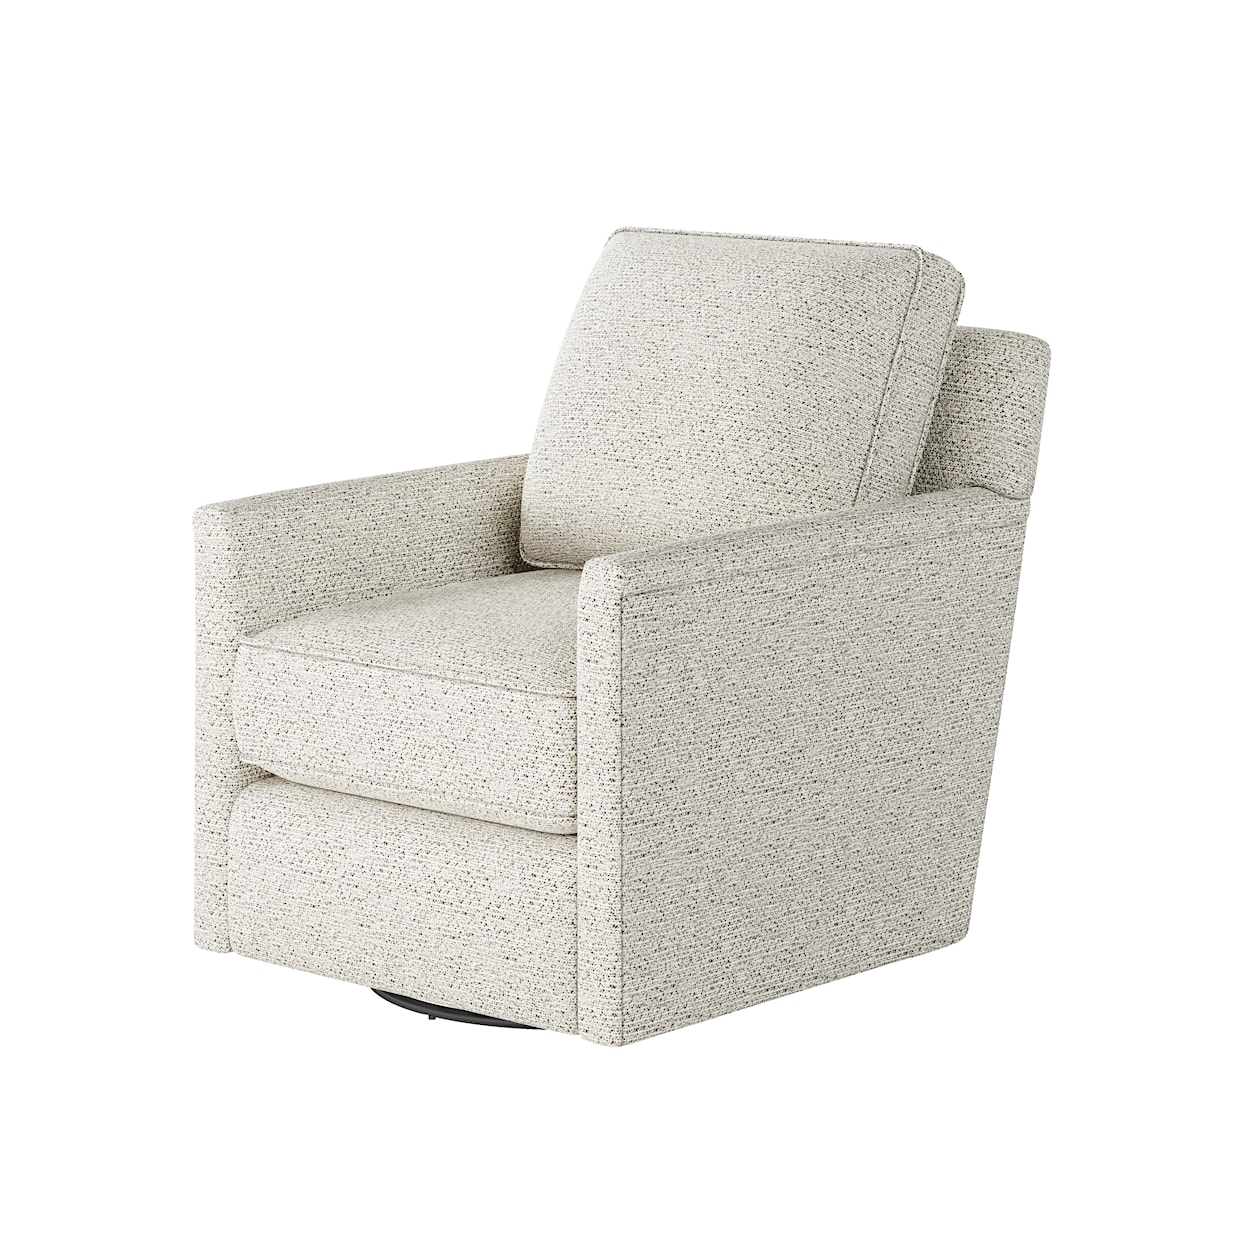 Fusion Furniture Grab A Seat Swivel Glider Chair